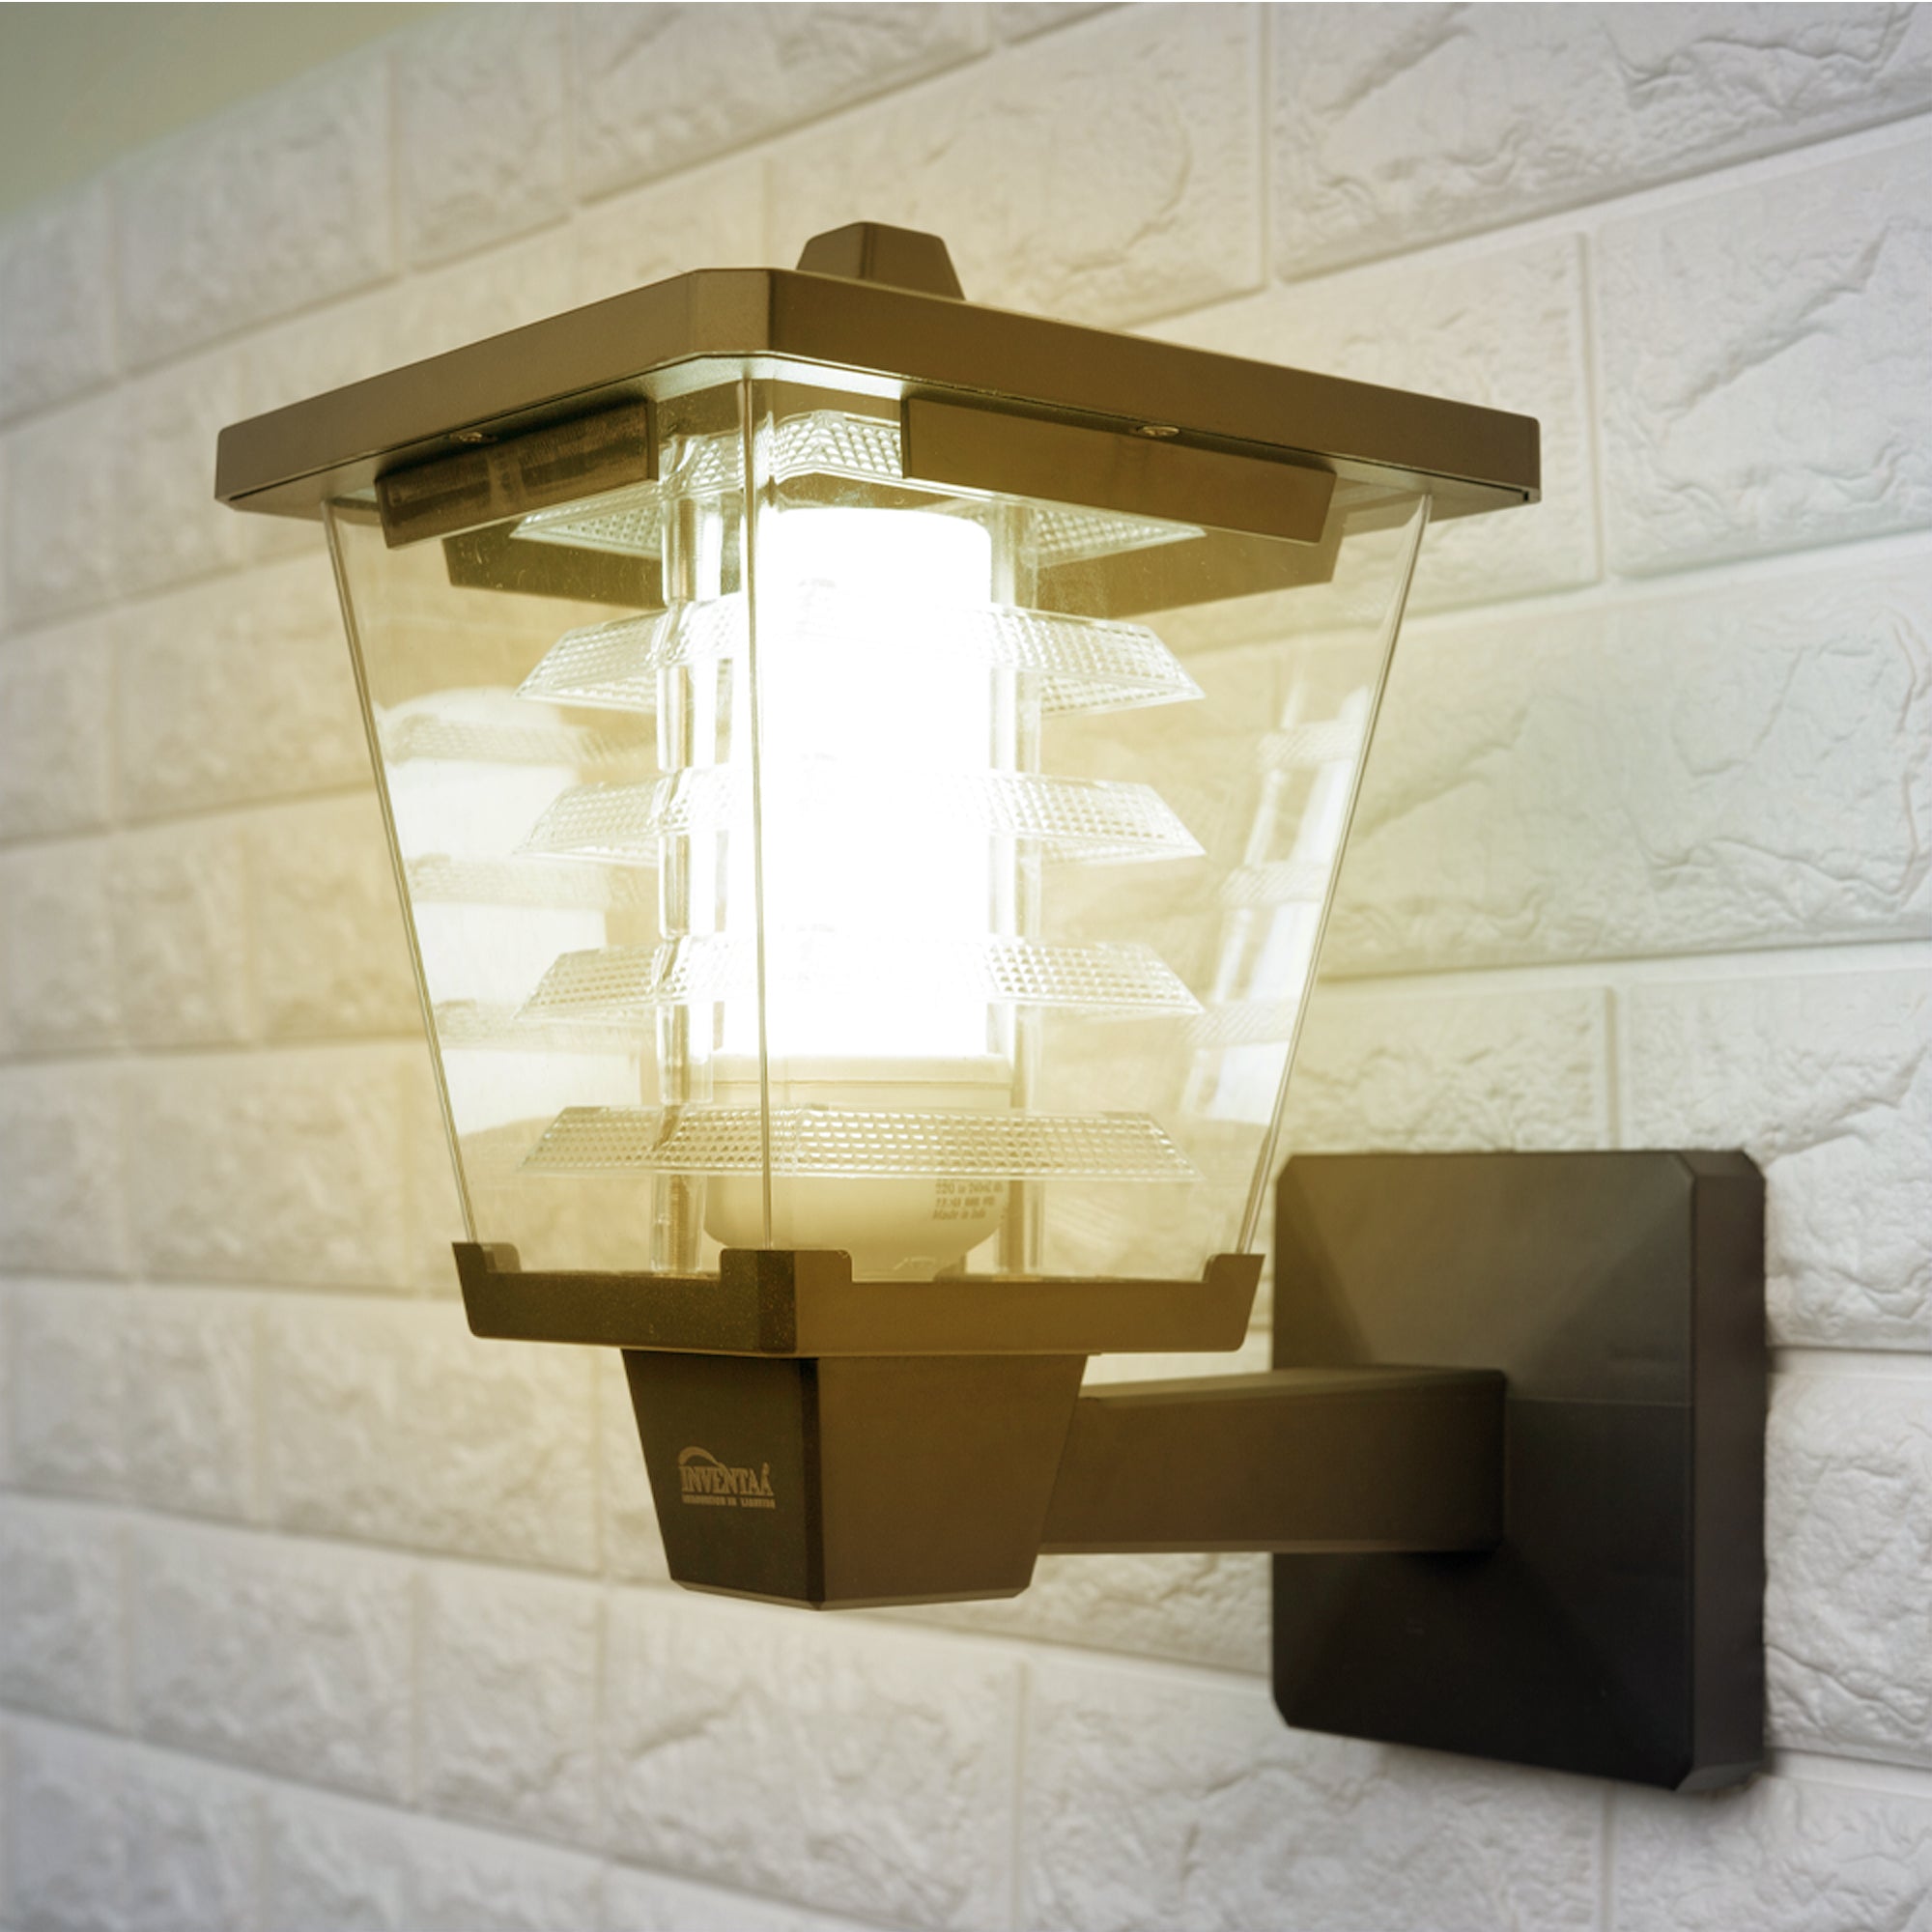 Wall glasis led wall light emitting a warm white glow #bulb options_warm